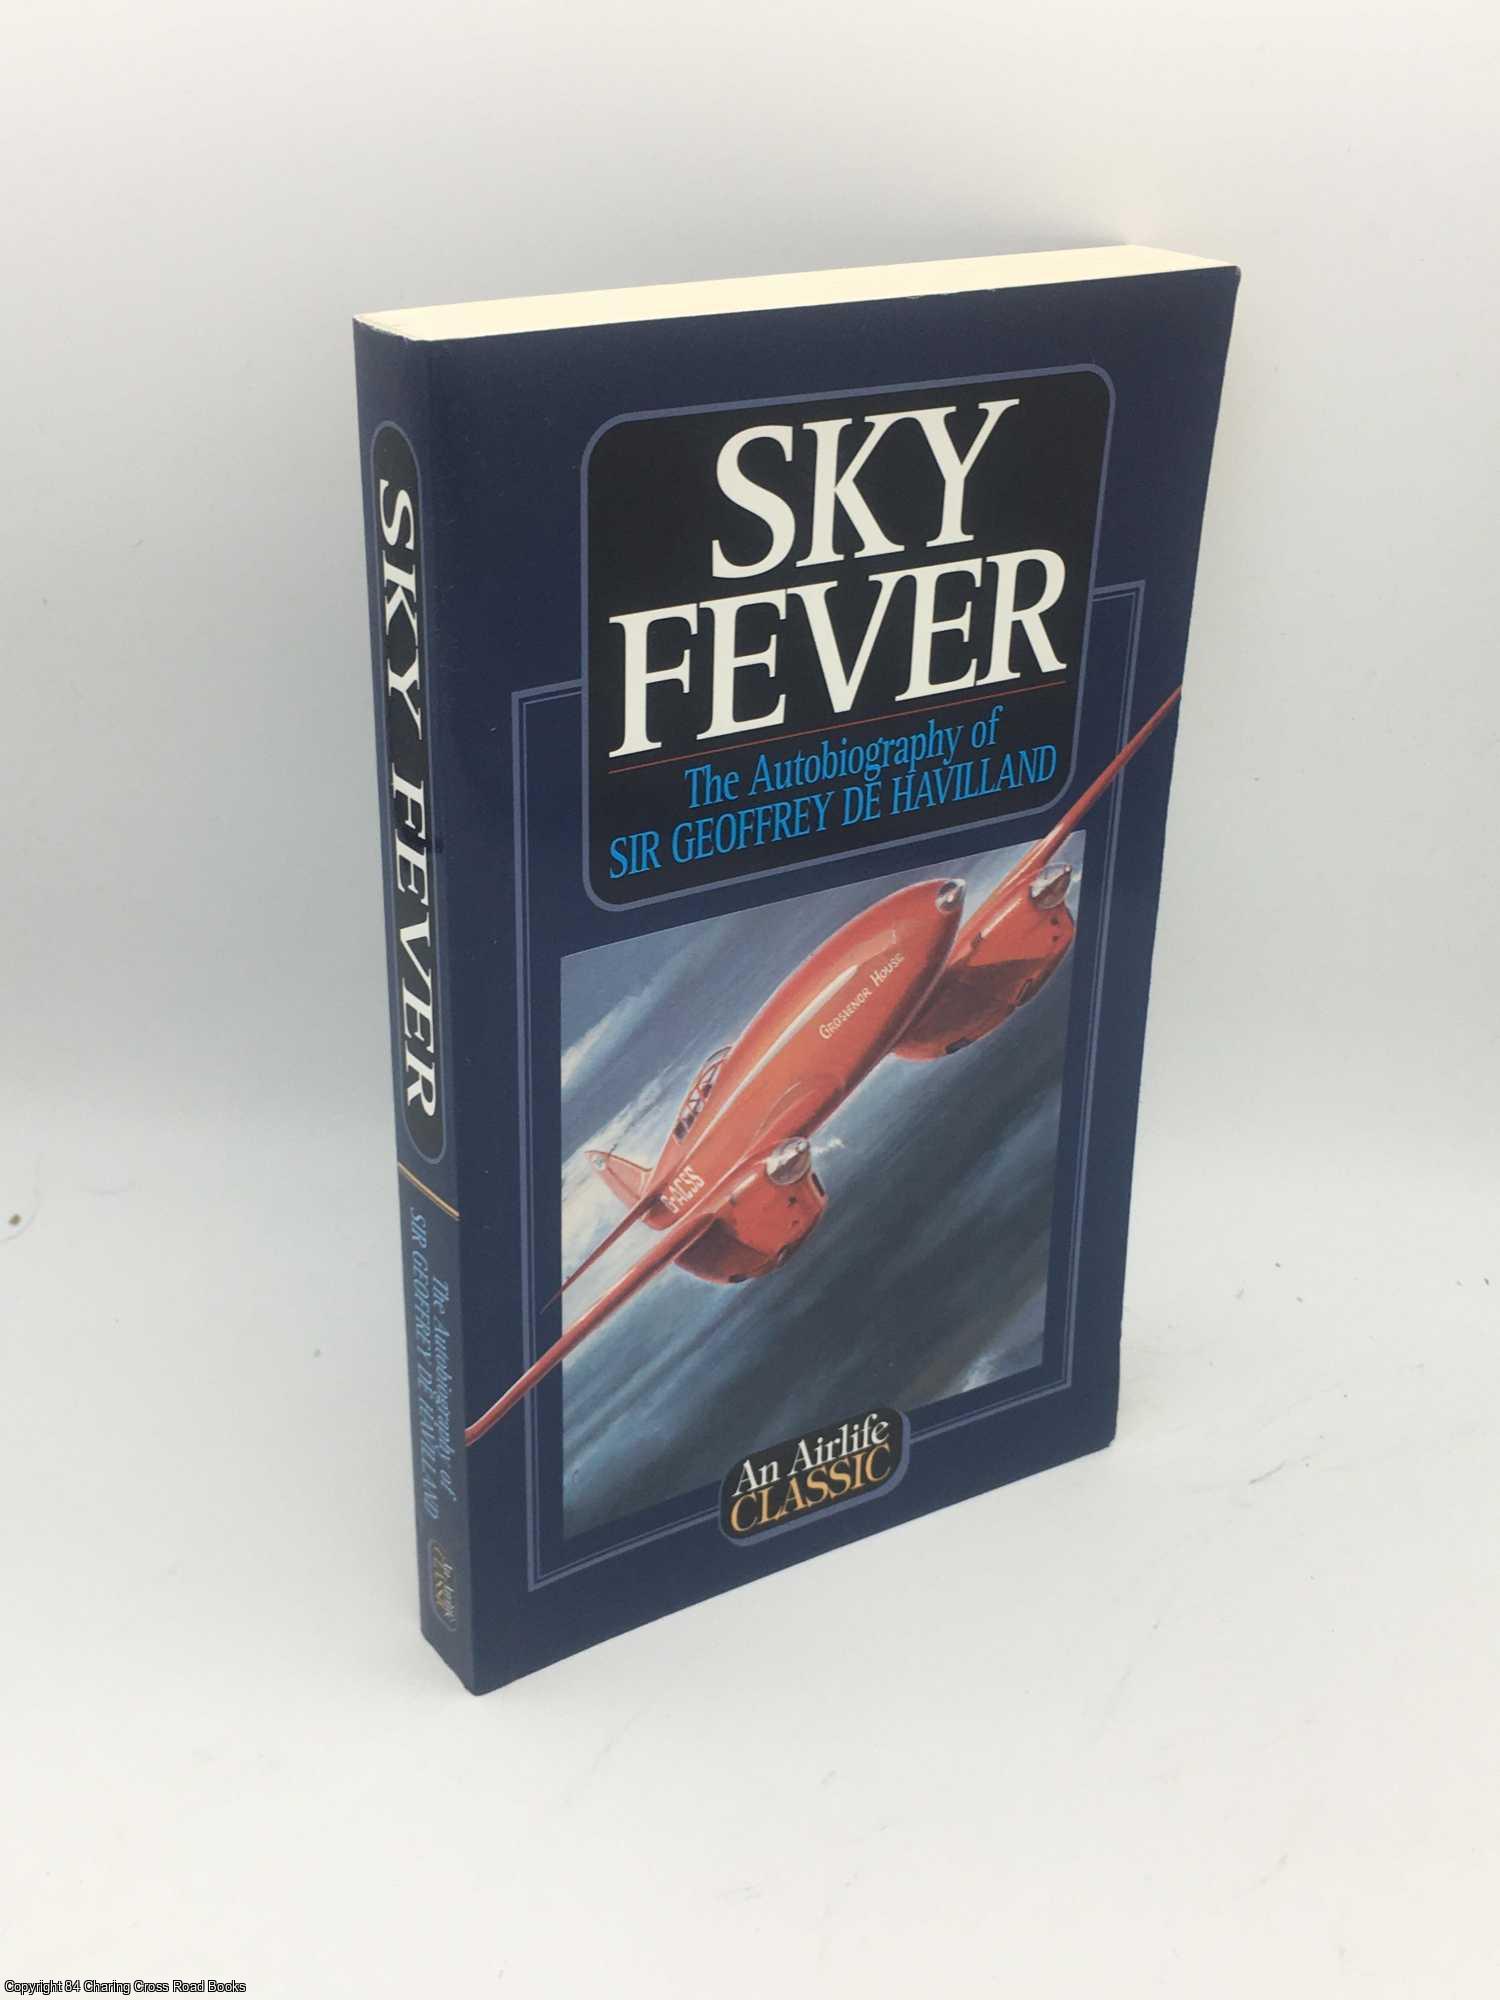 Havilland, Sir Geoffrey De - Sky Fever: The Autobiography of Sir Geoffrey De Havilland